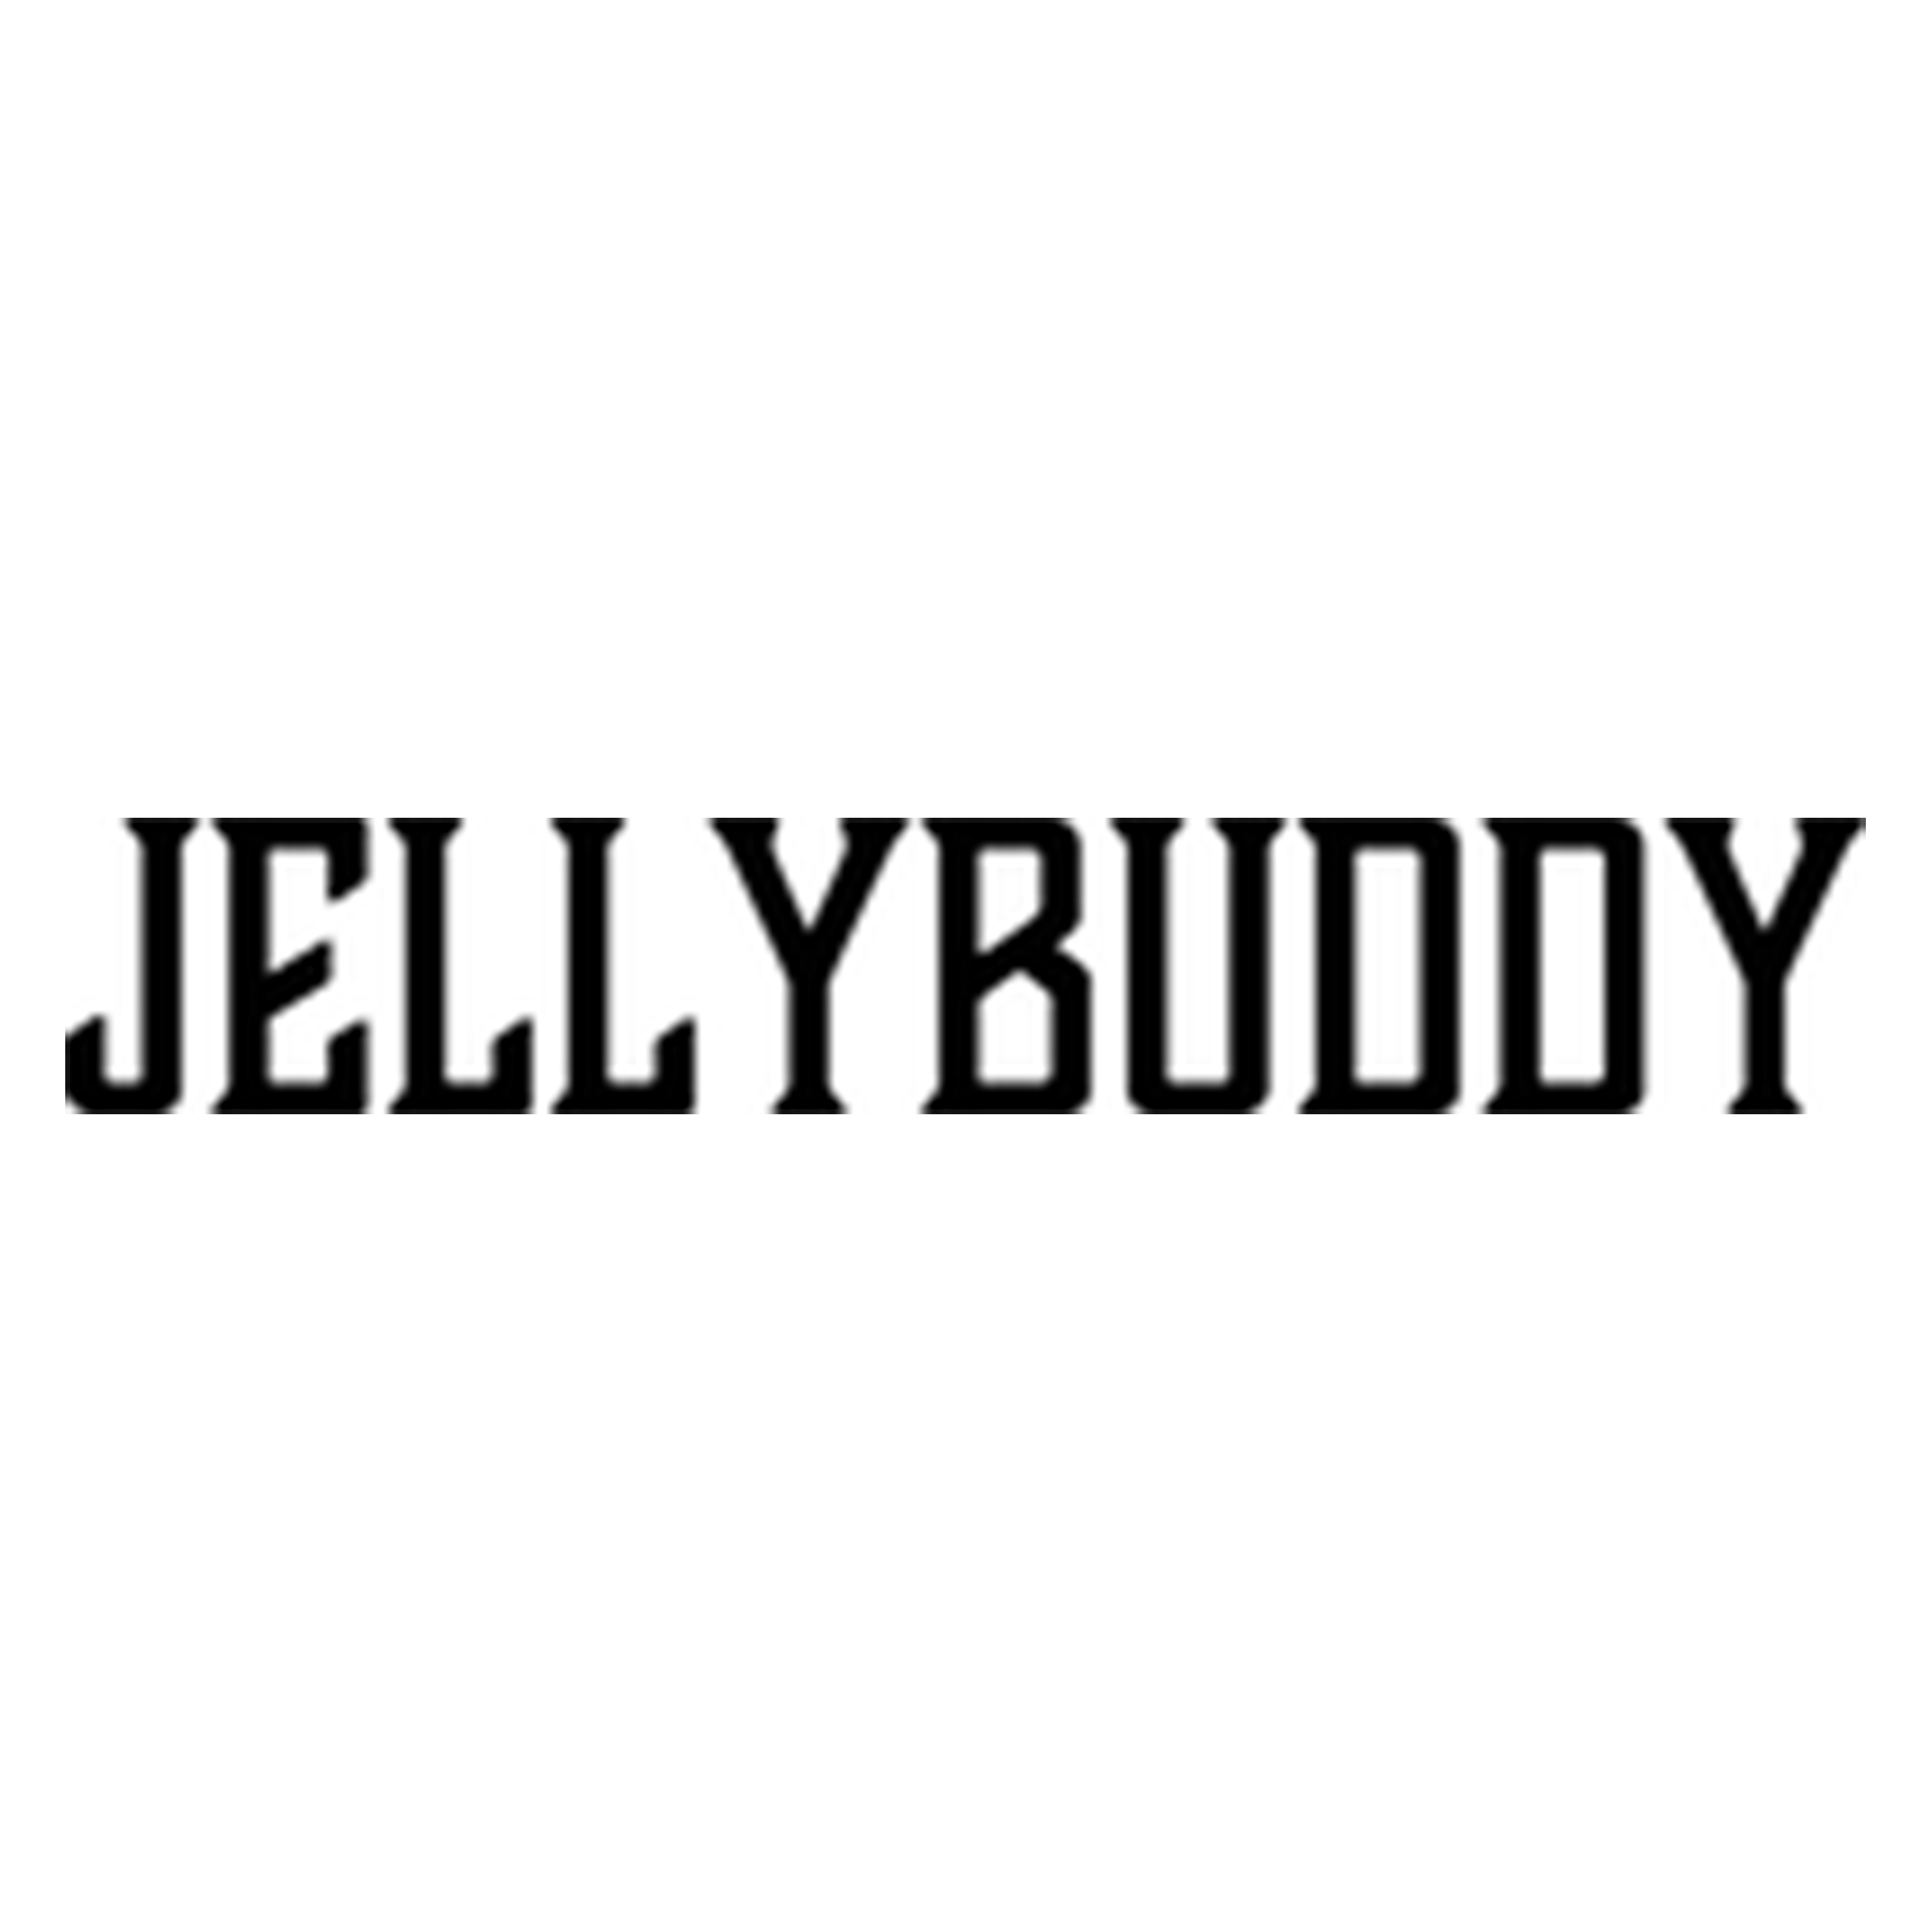 Shop JellyBuddy logo